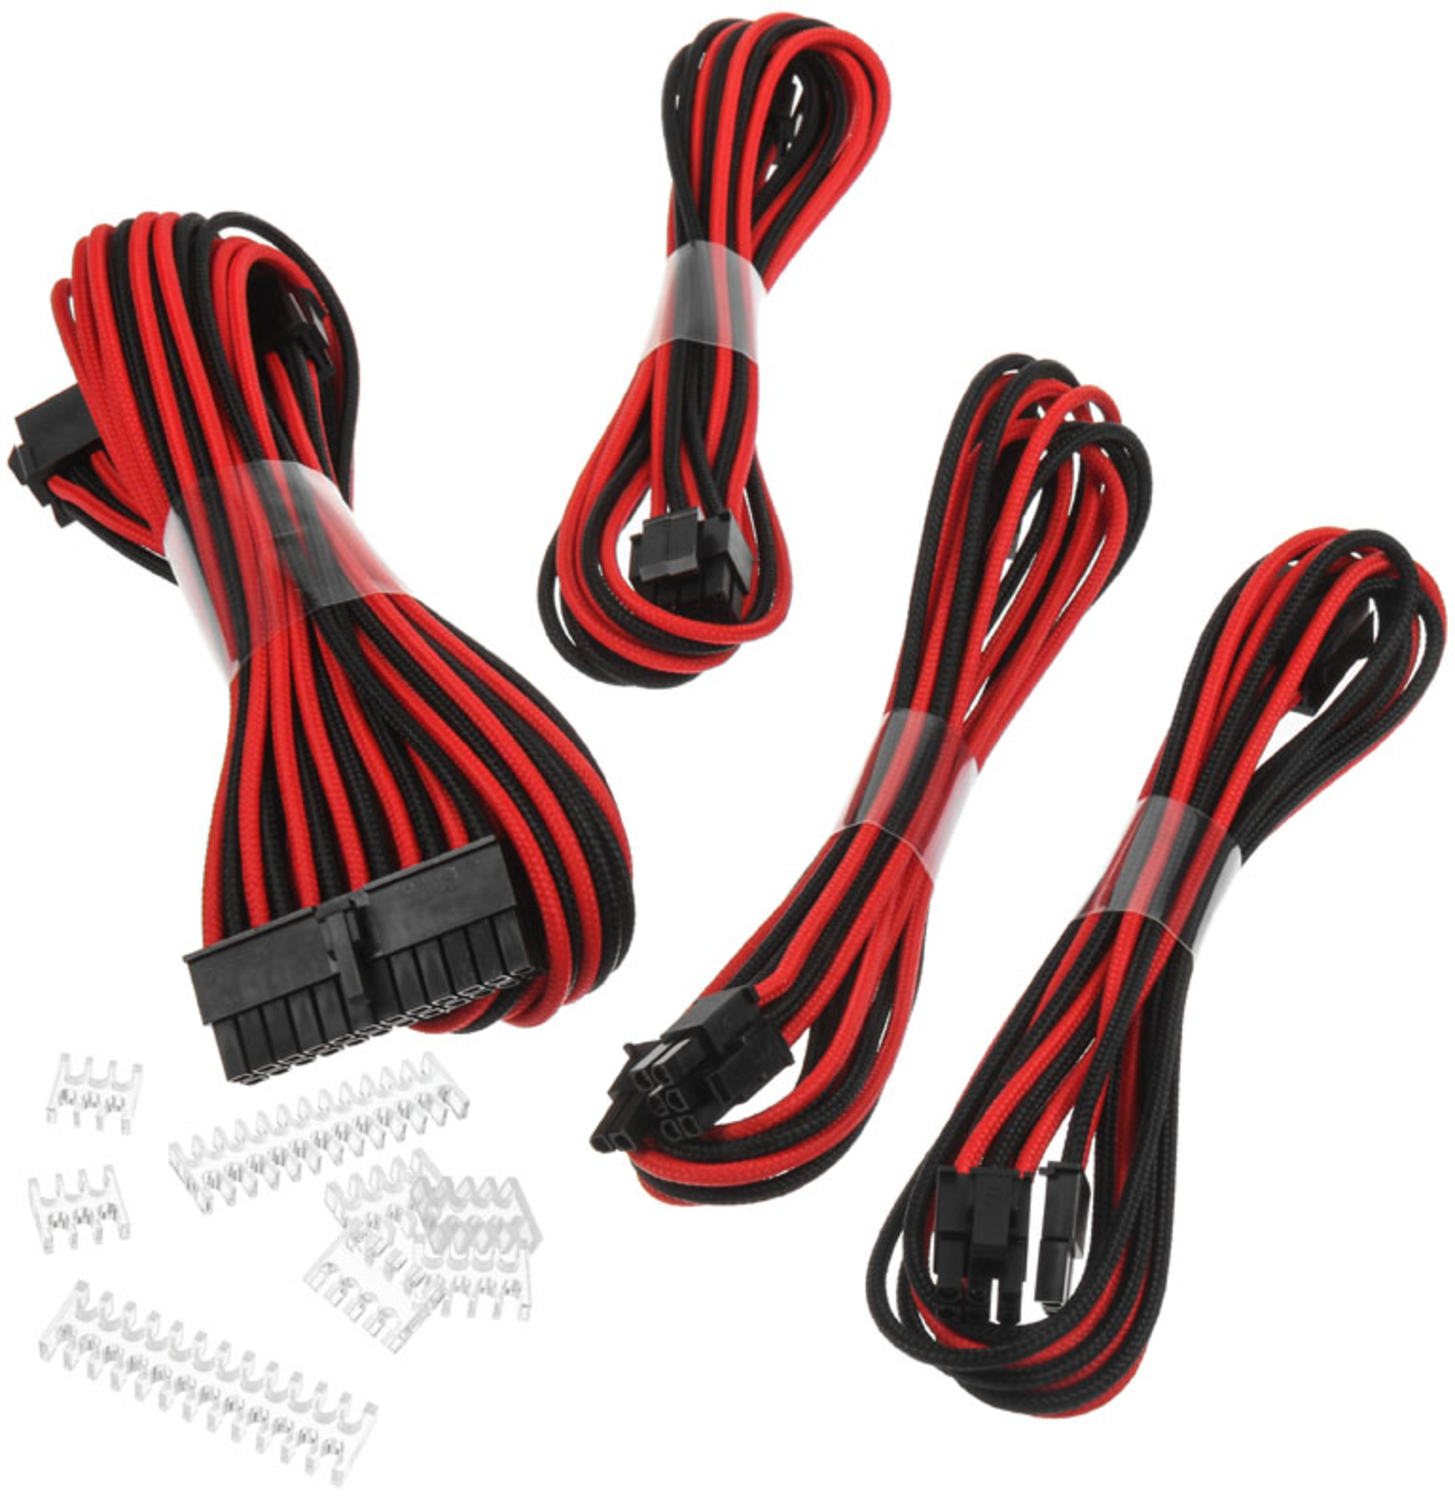 Kit de Expansión Phanteks Cables Sleeved 50cm Negro / Rojo